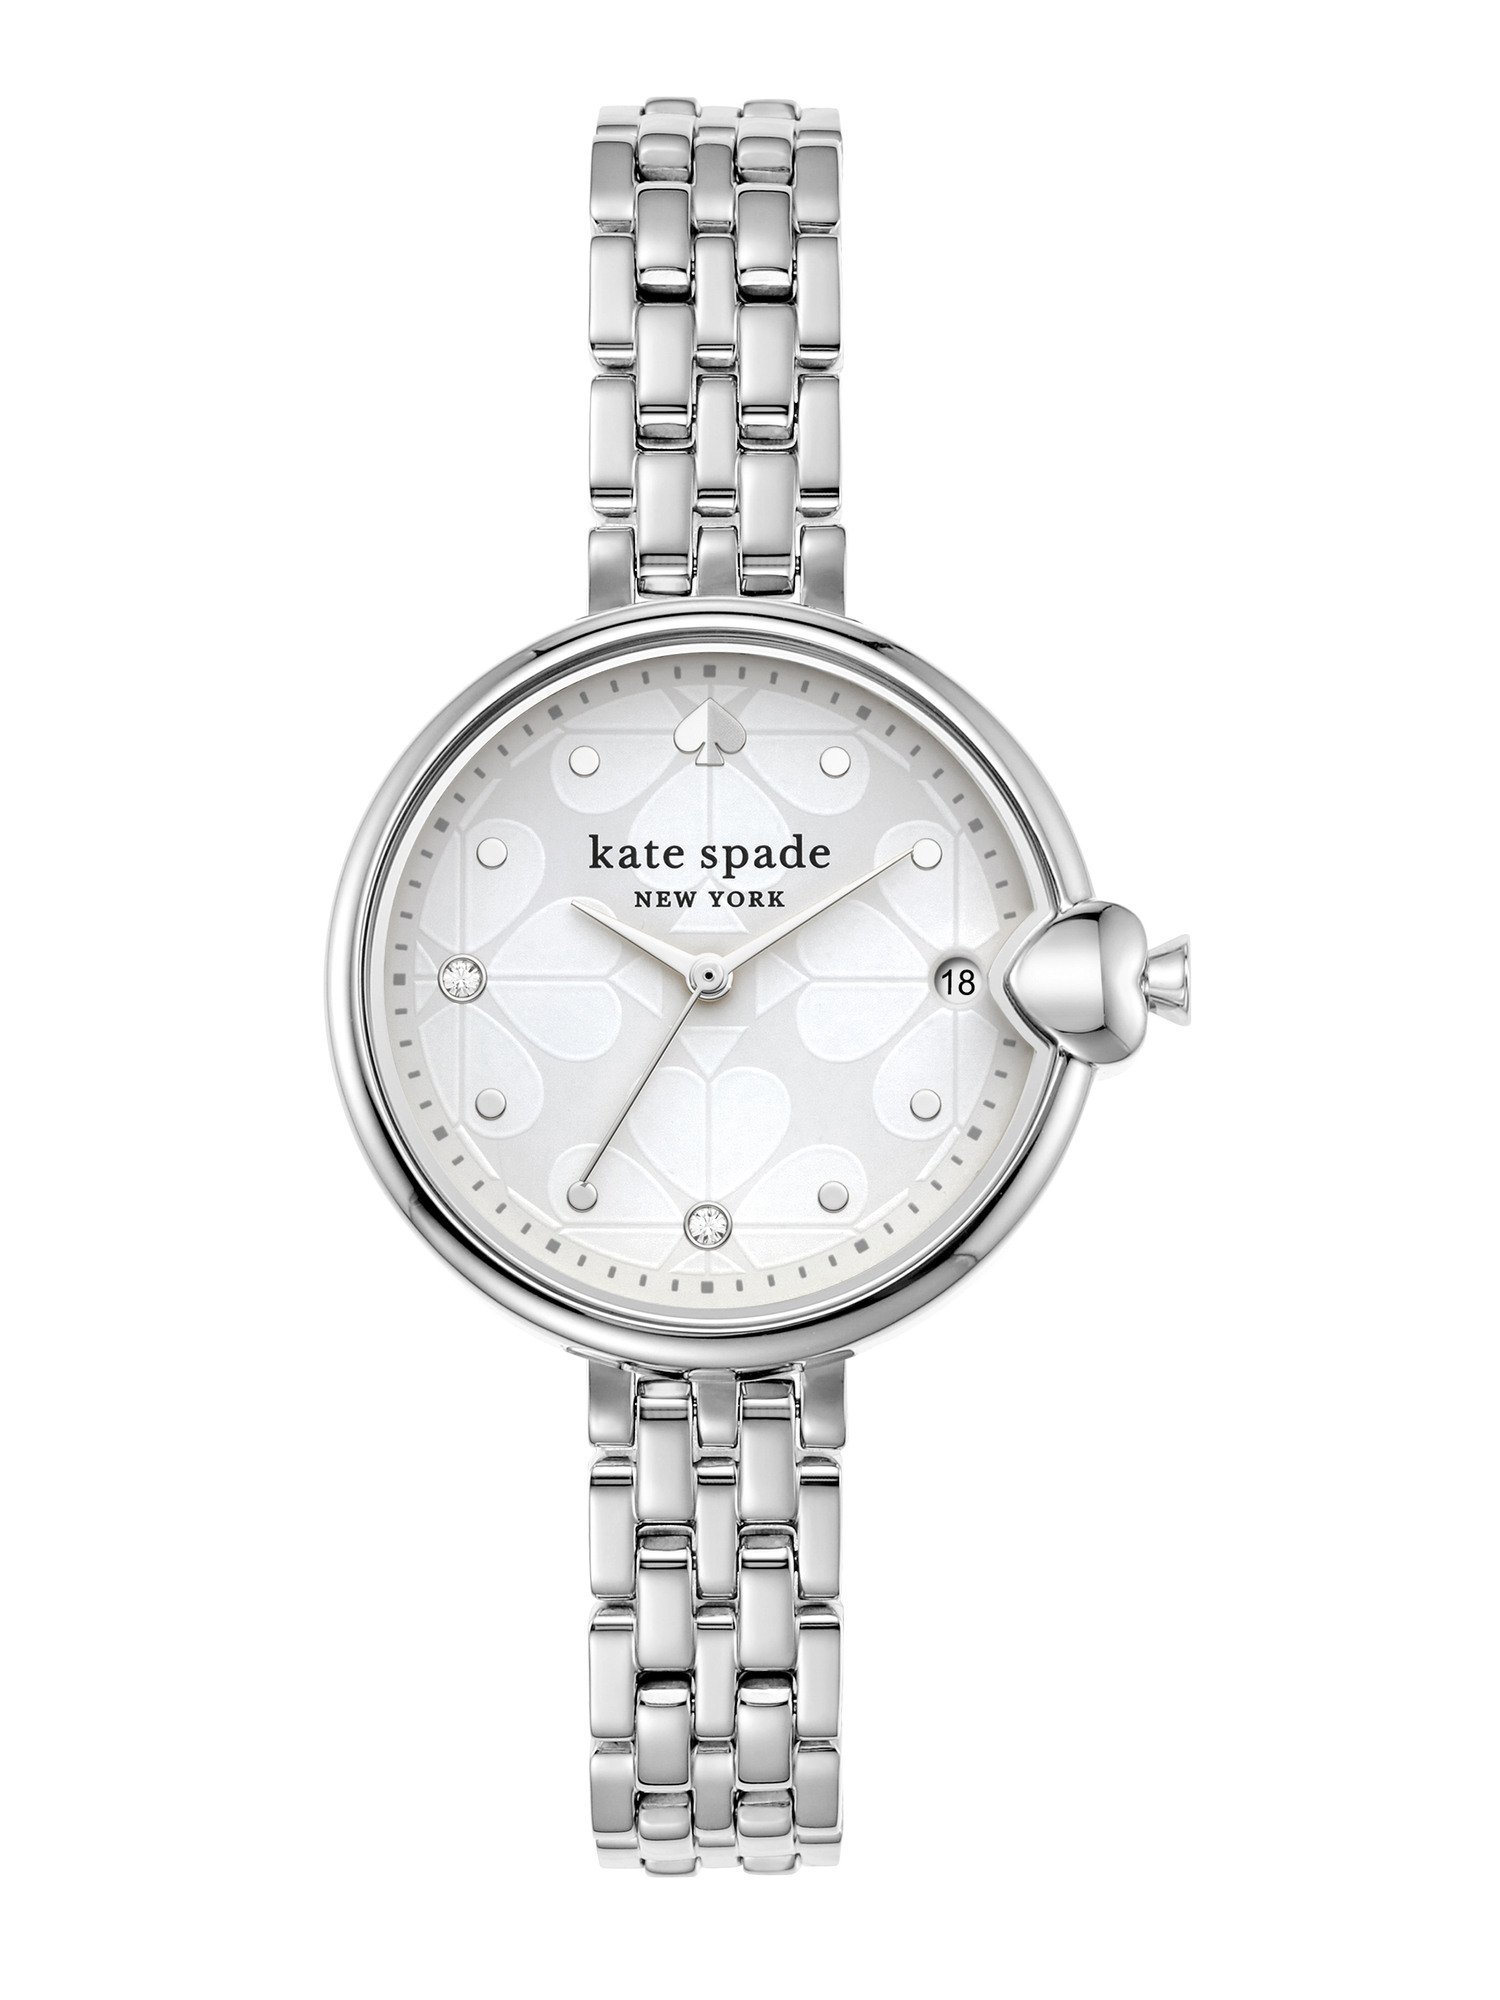 kate spade new york Chelsea Park KSW1760 ウォッチステーションインターナショナル アクセサリー・腕時計 腕時計 シルバー【送料無料】